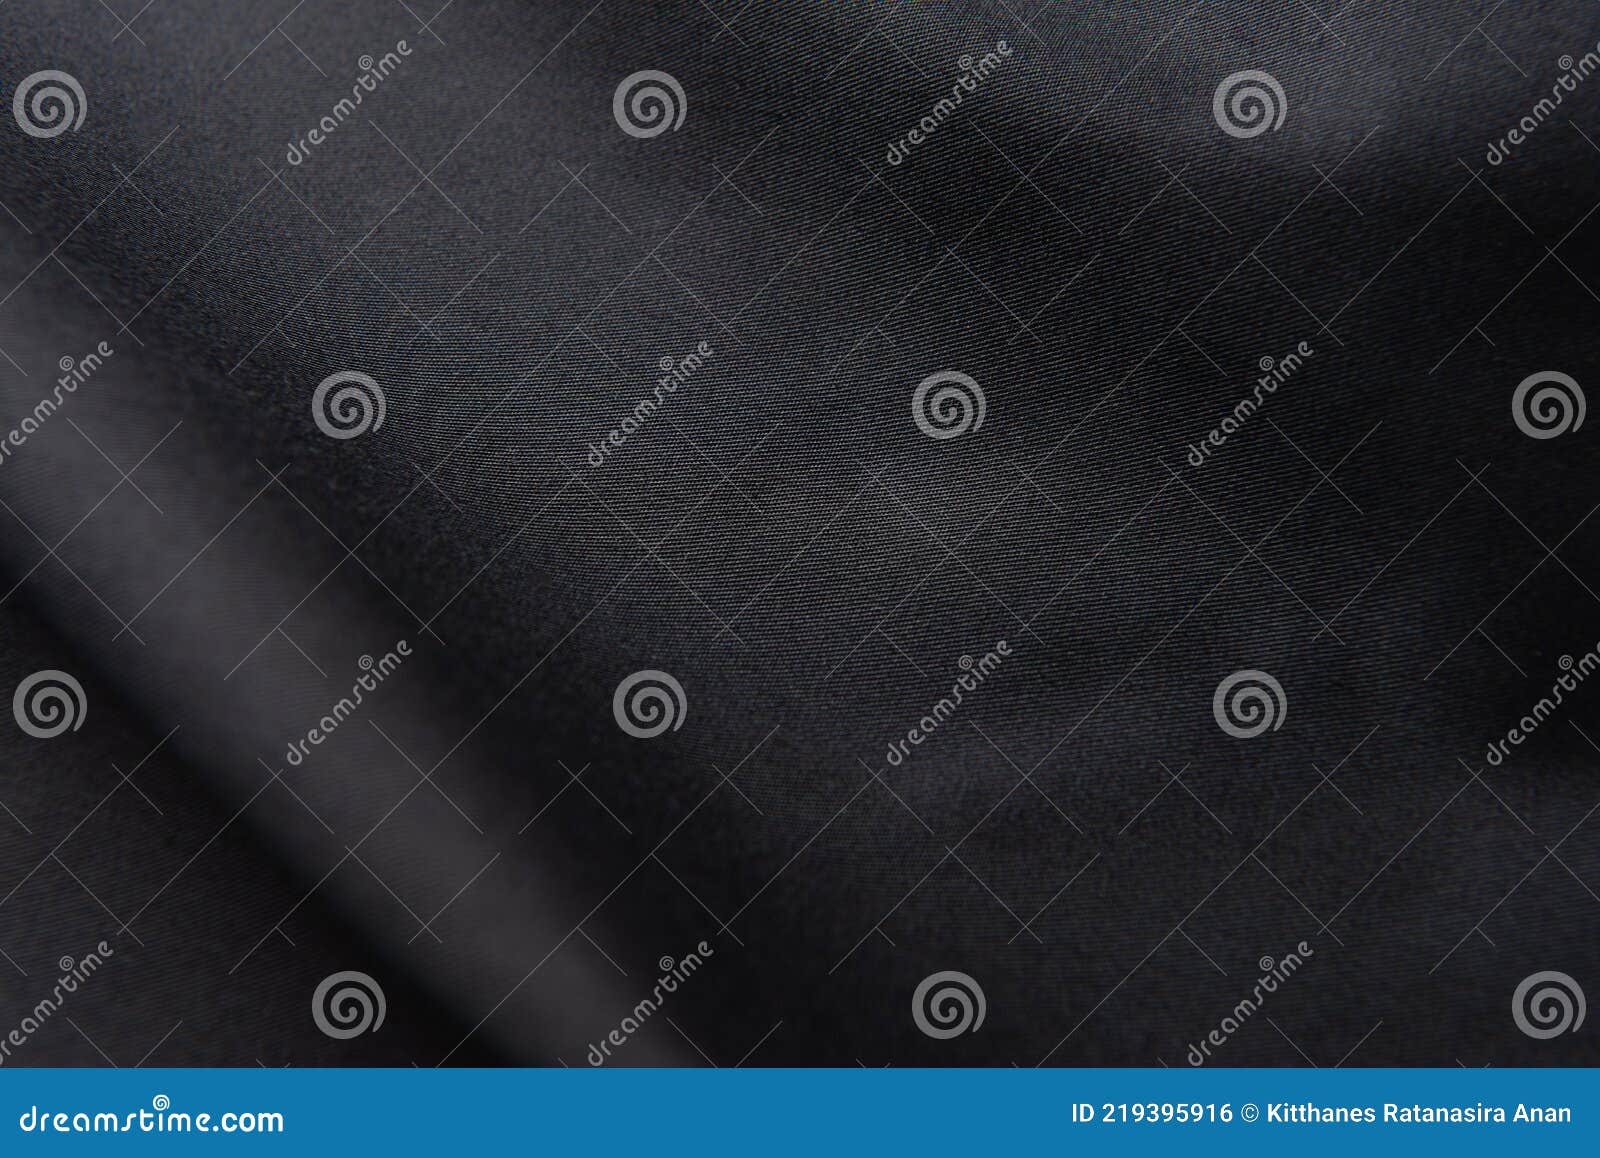 Closeup of Rippled Black Silk Fabric, Black Fabric Texture Background ...